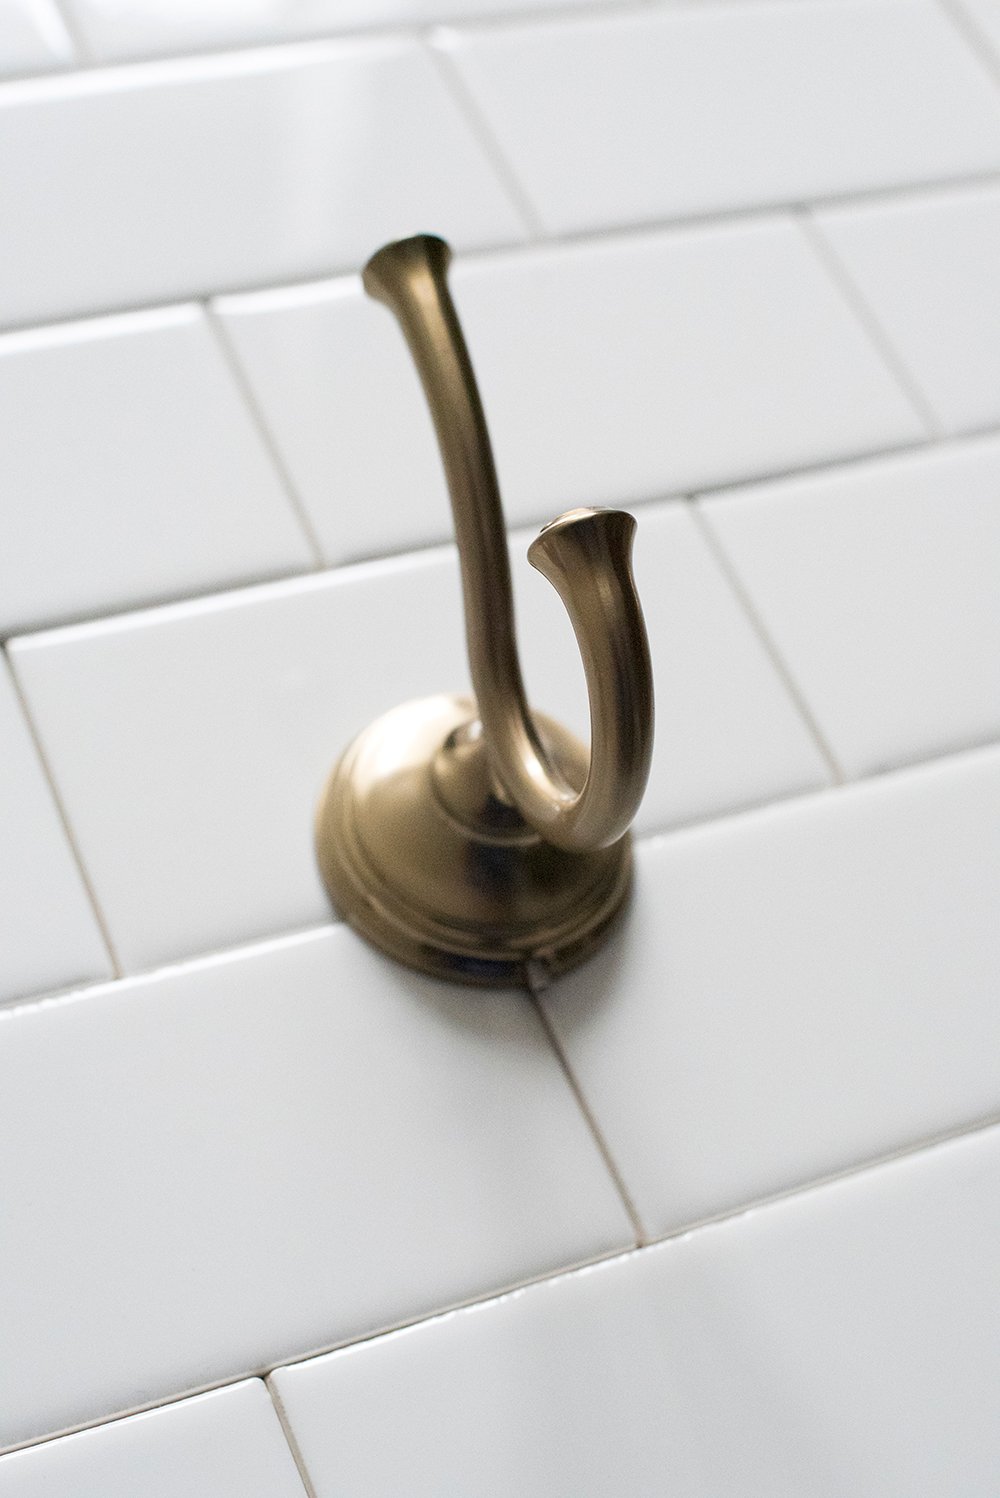 How to Choose Cohesive Bathroom Plumbing Fixtures - roomfortuesday.com